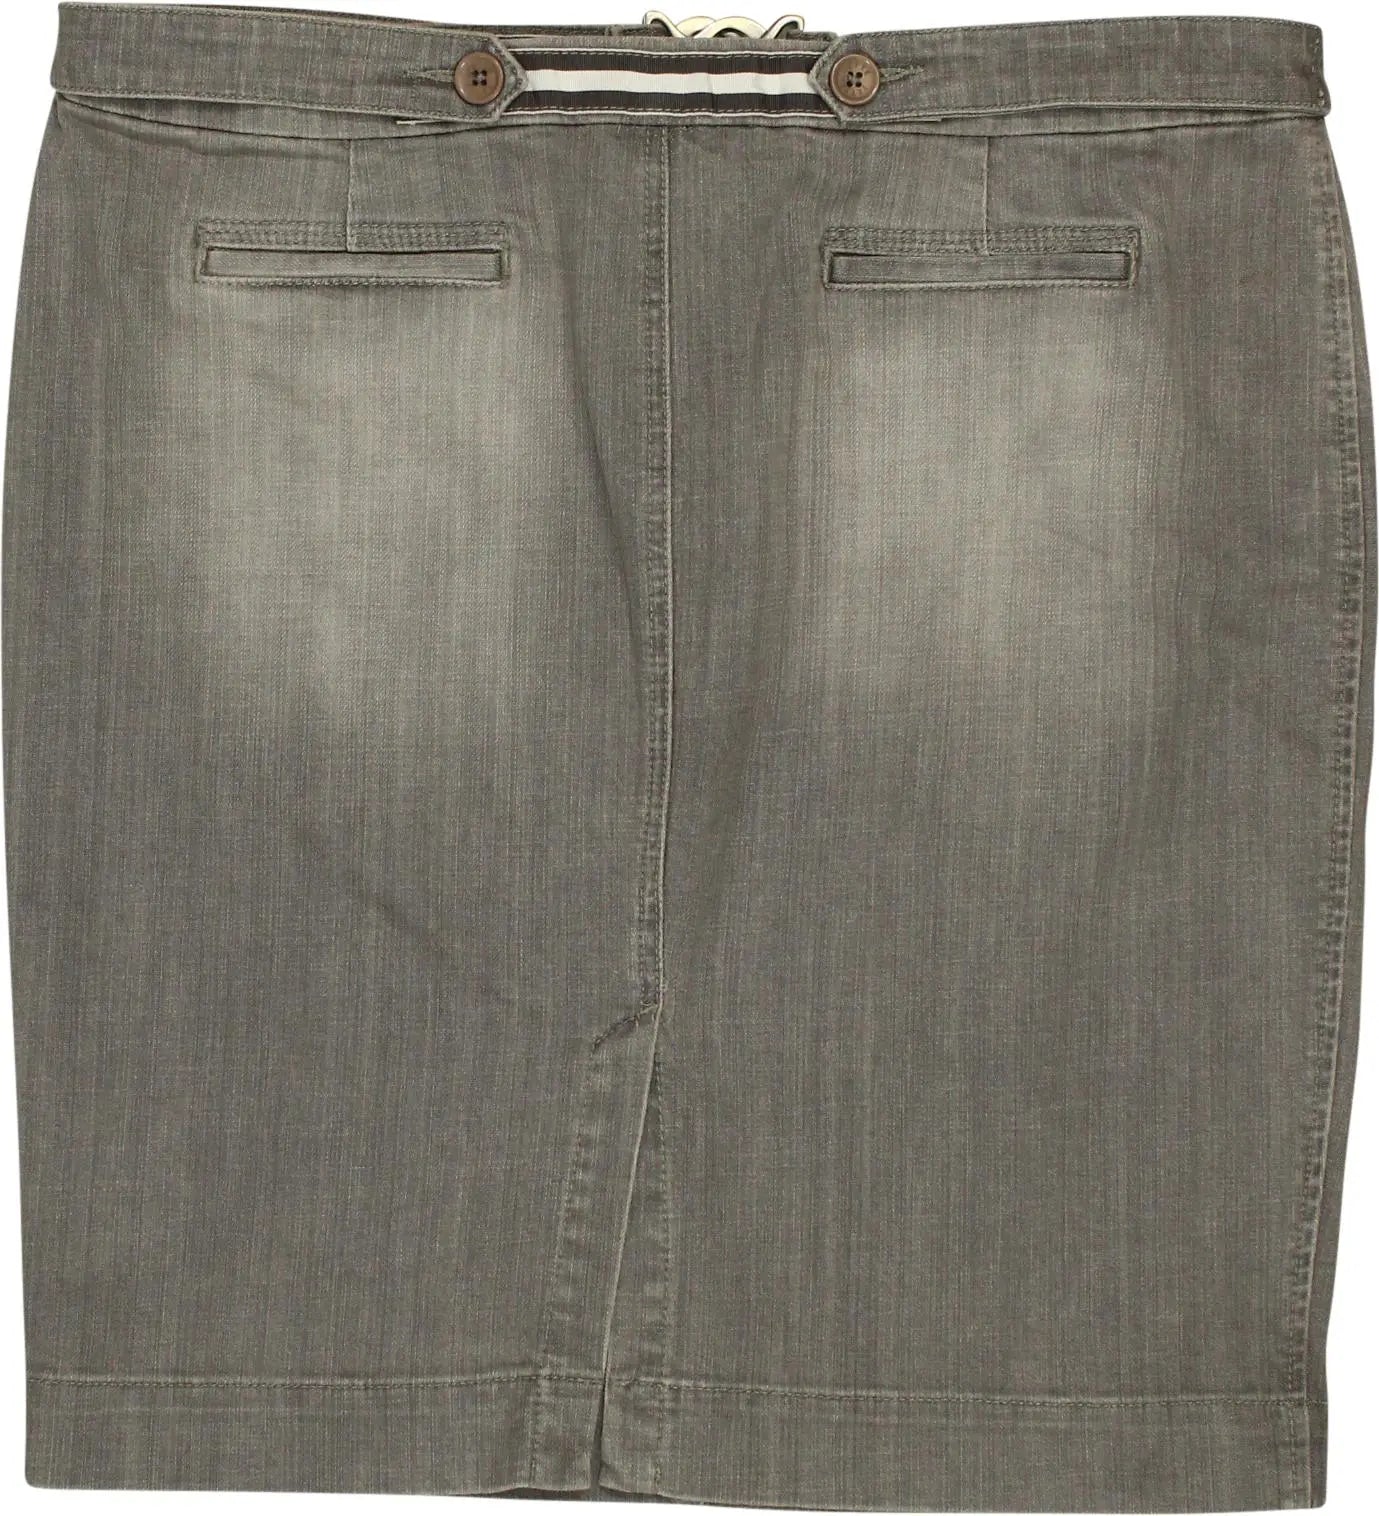 Jette - Denim Skirt- ThriftTale.com - Vintage and second handclothing